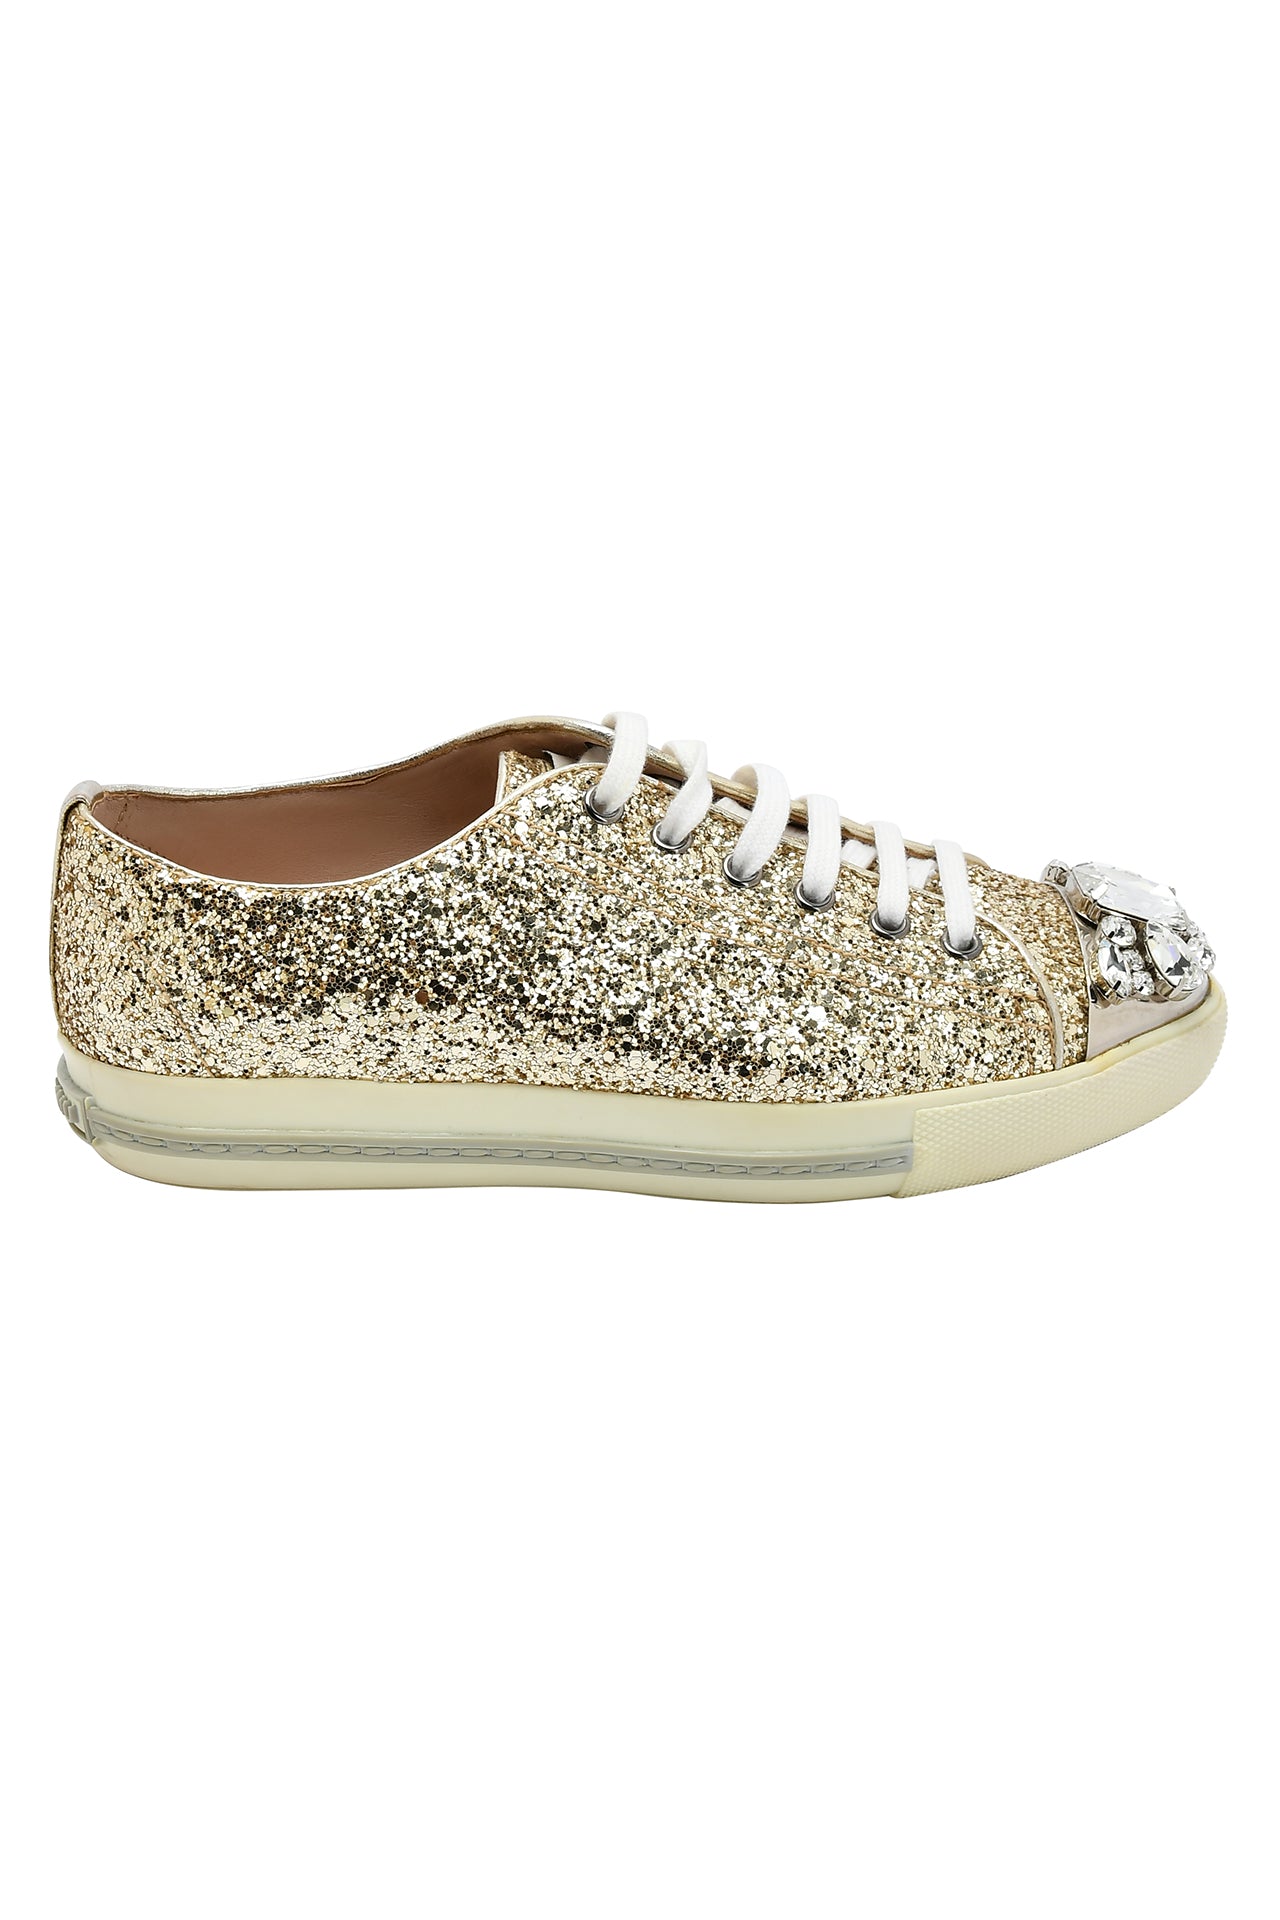 Miu Miu Coarse Glitter Leather Crystal Embellished Cap Toe Sneakers EU 36.5